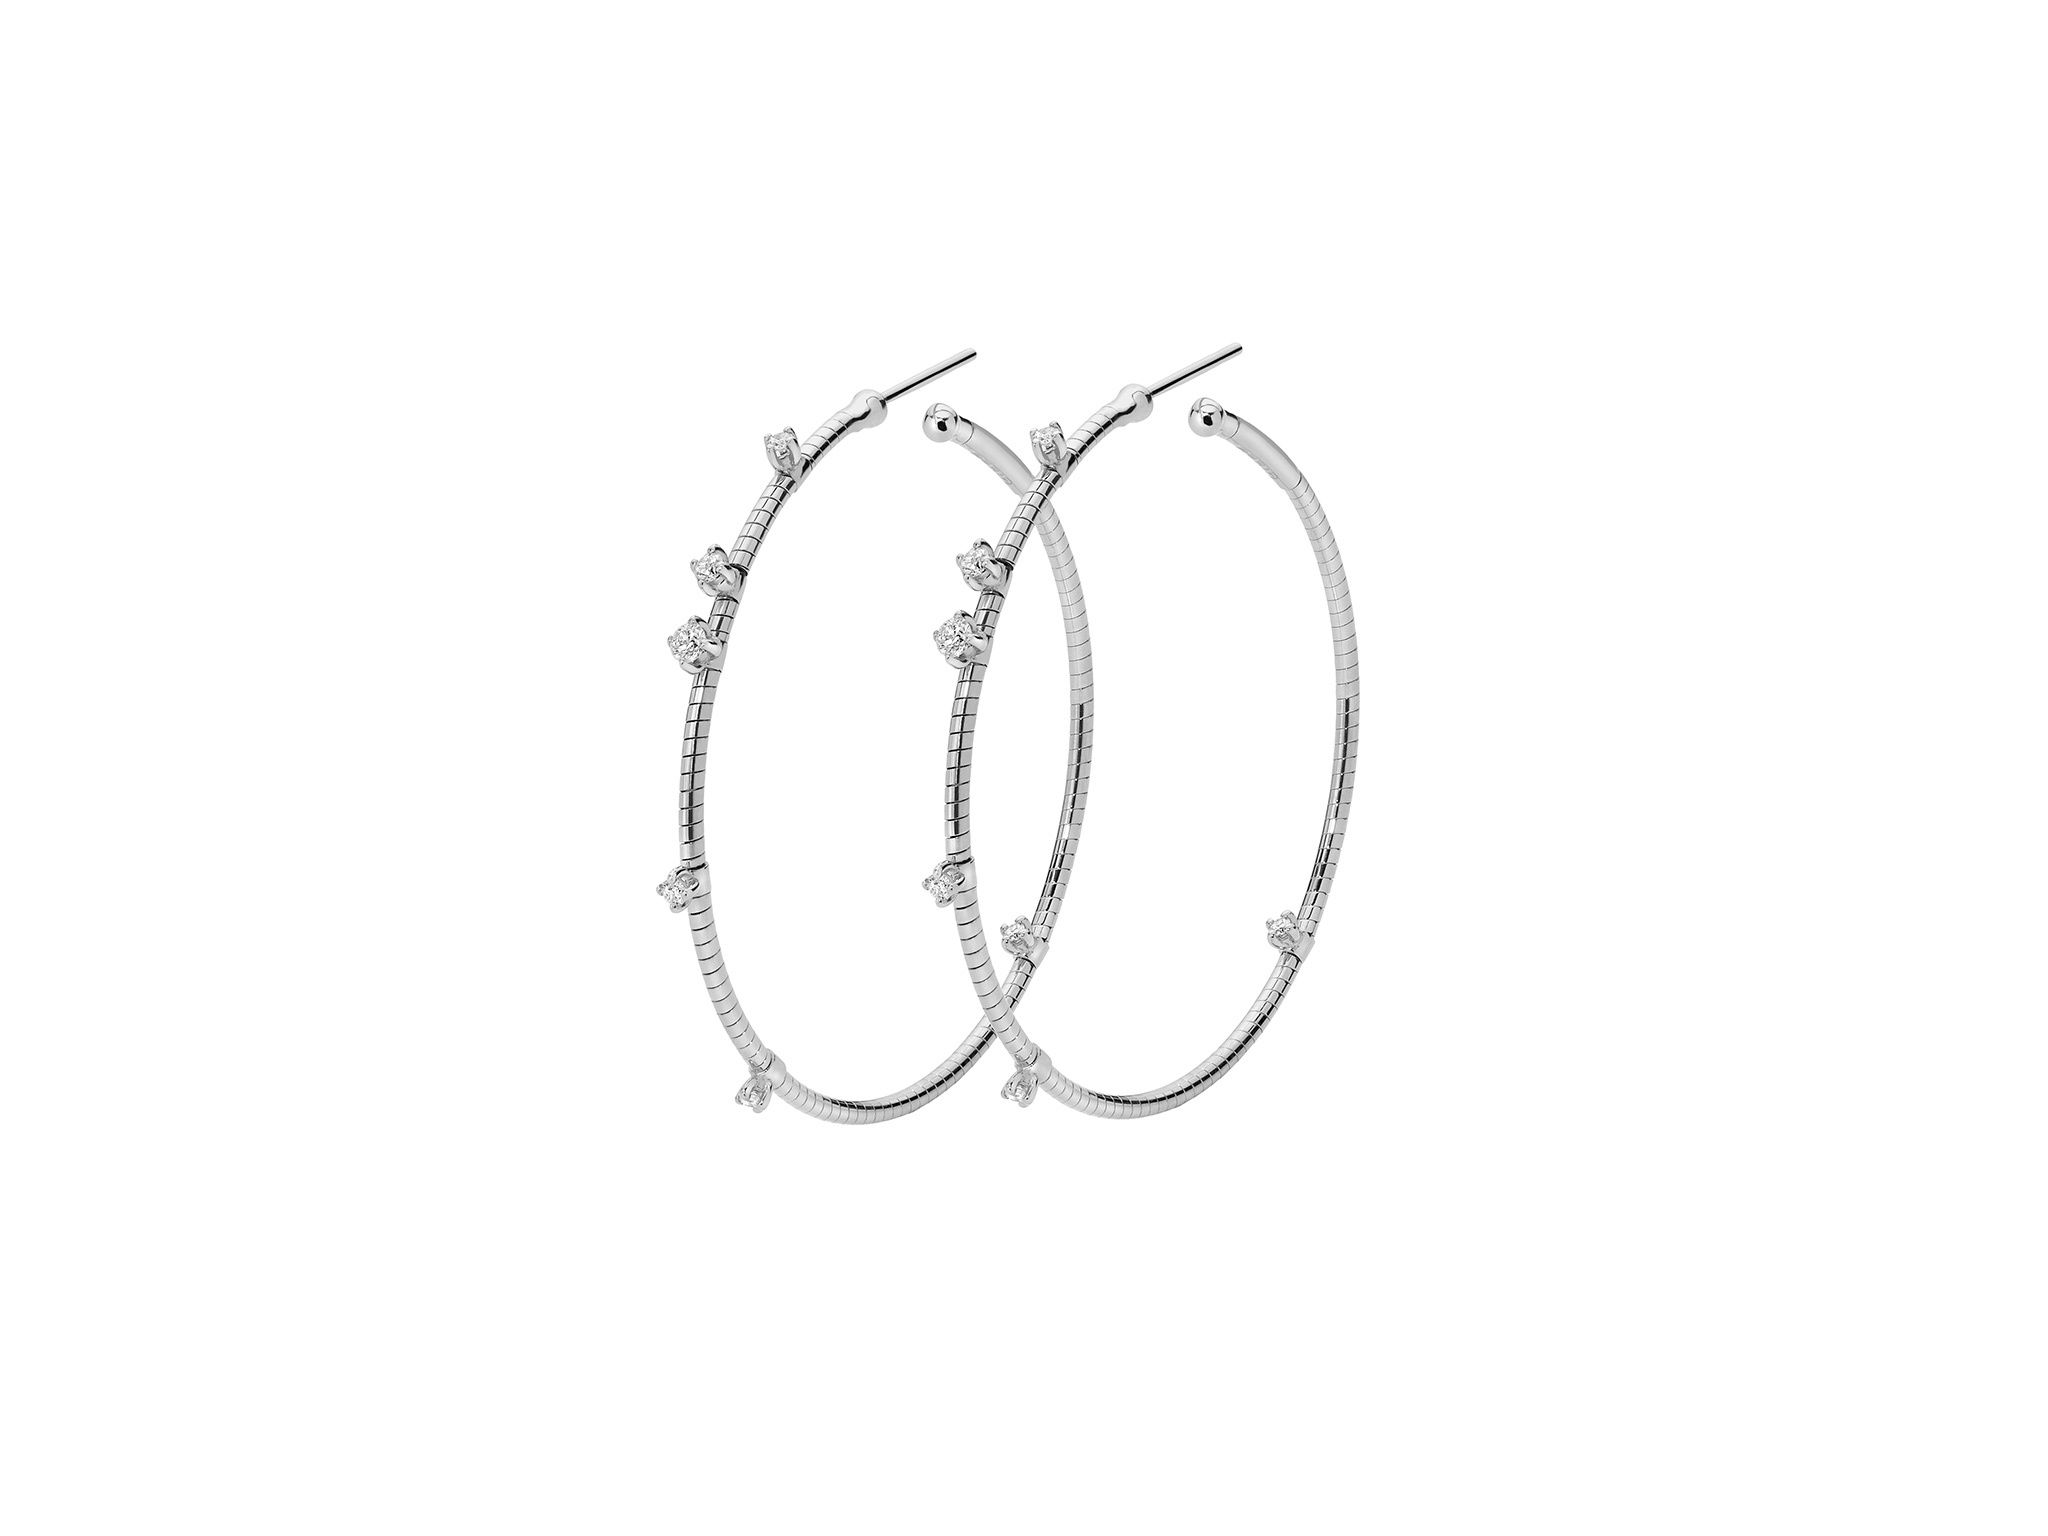 Rugiada Diamanti 4cm Hoop Earrings with White Diamonds in 18kt White Gold